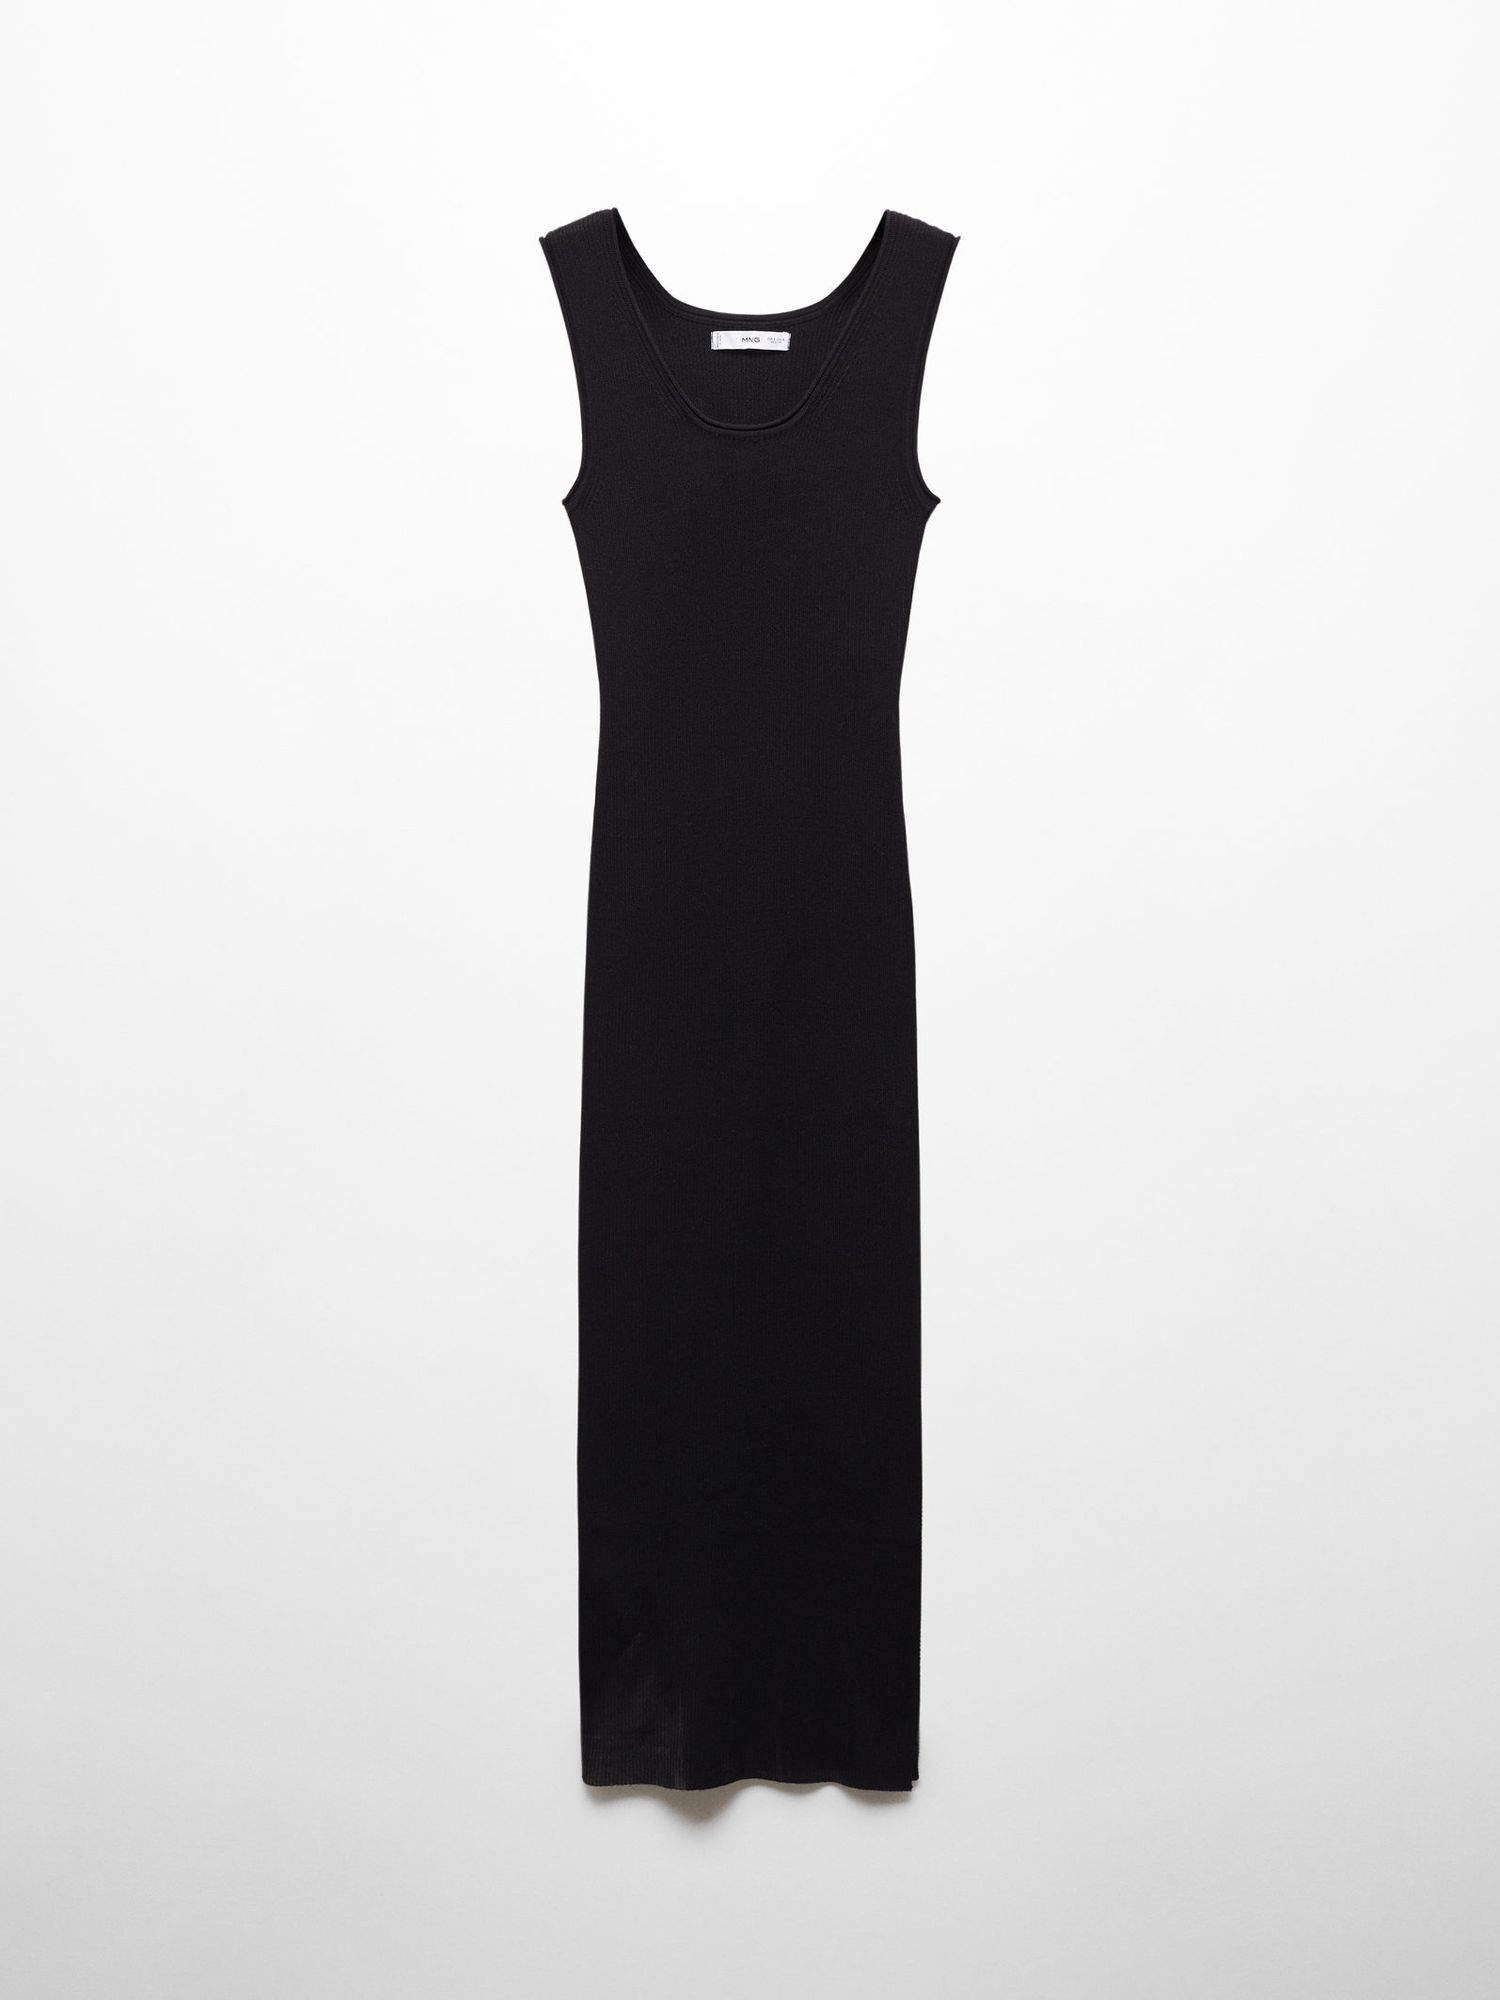 Mango Naomi Ribbed Bodycon Midi Dress, Black, 10